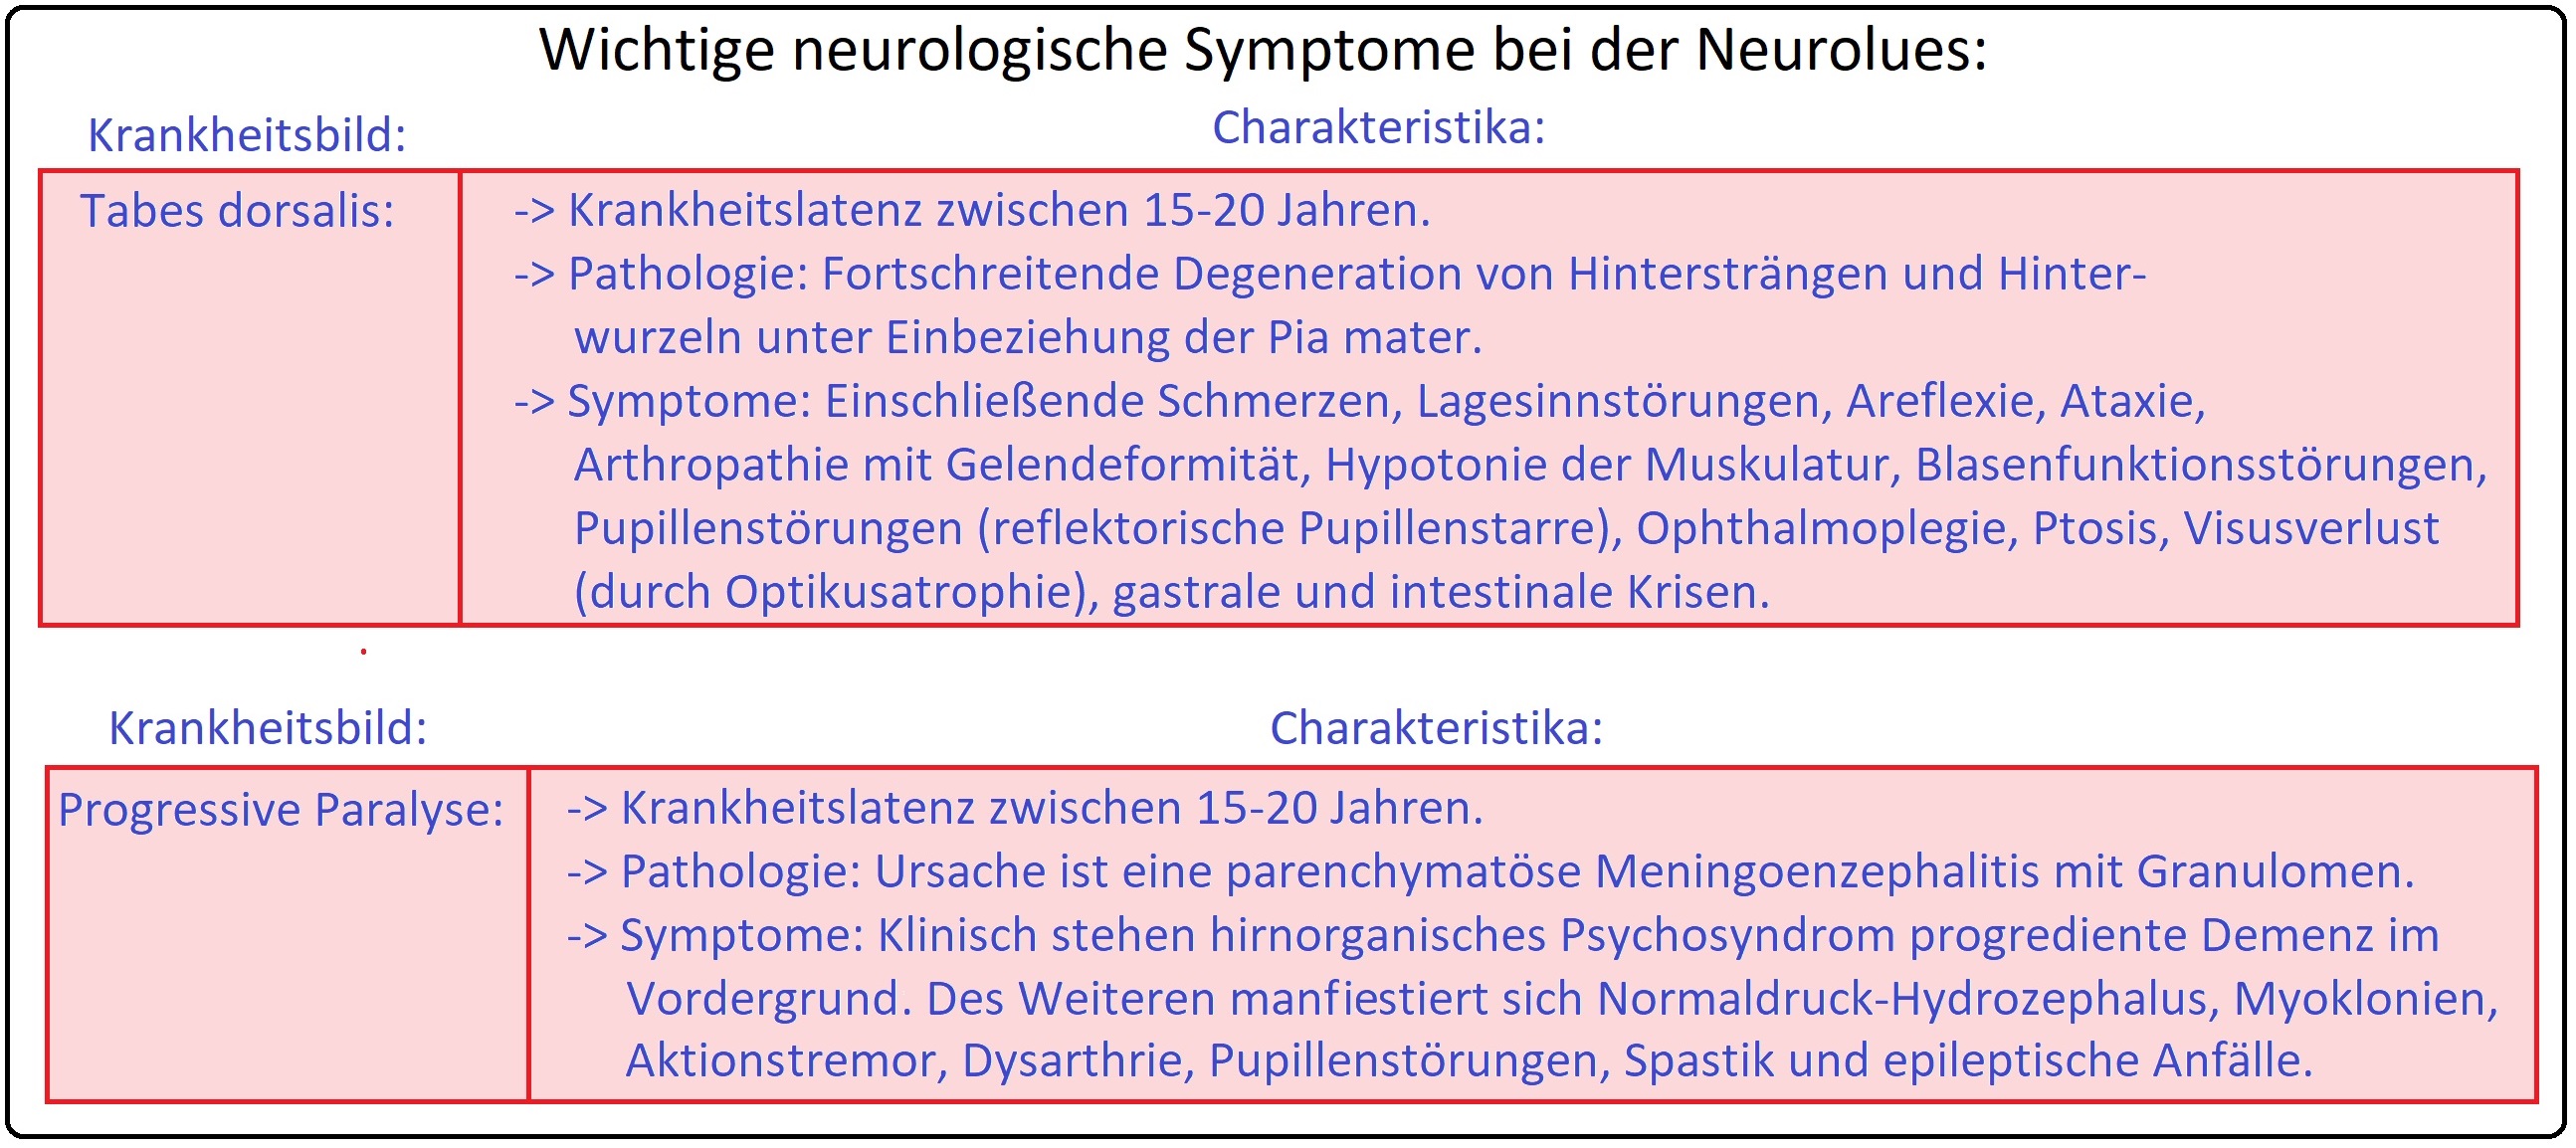 021 Wichtige neurologische Symptome bei der Neurolues